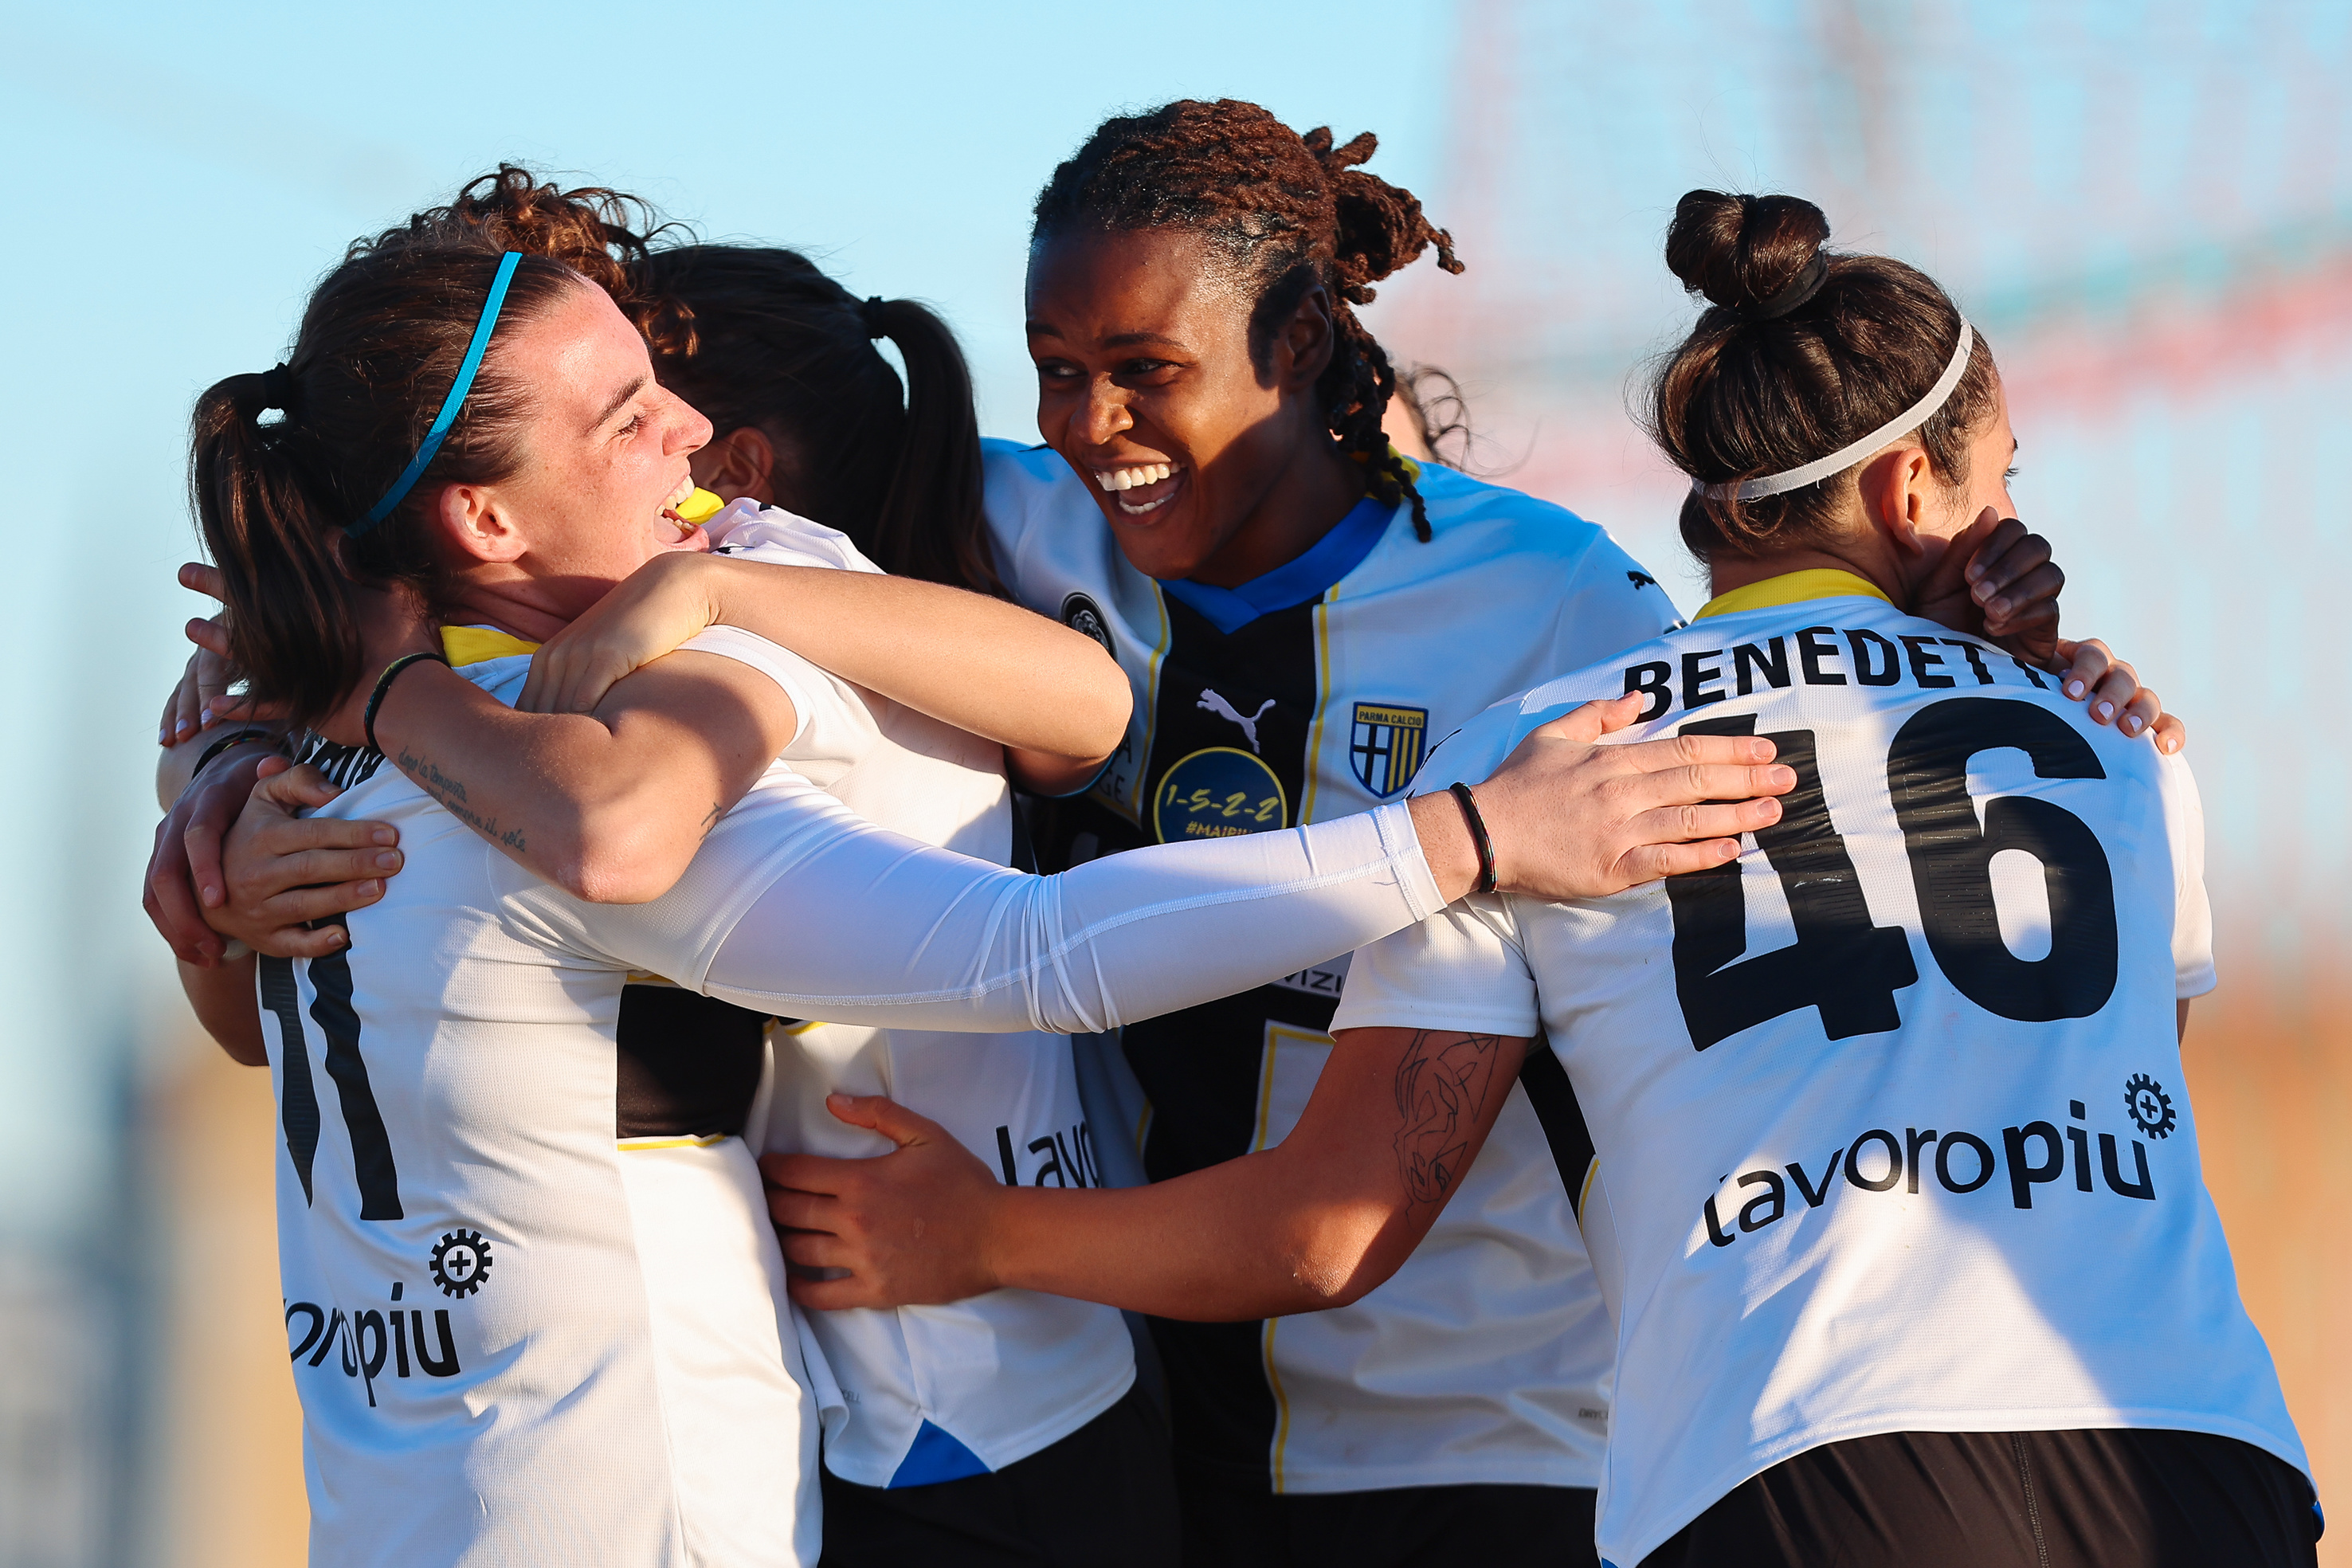 The Parma women's team celebrating a goal. 